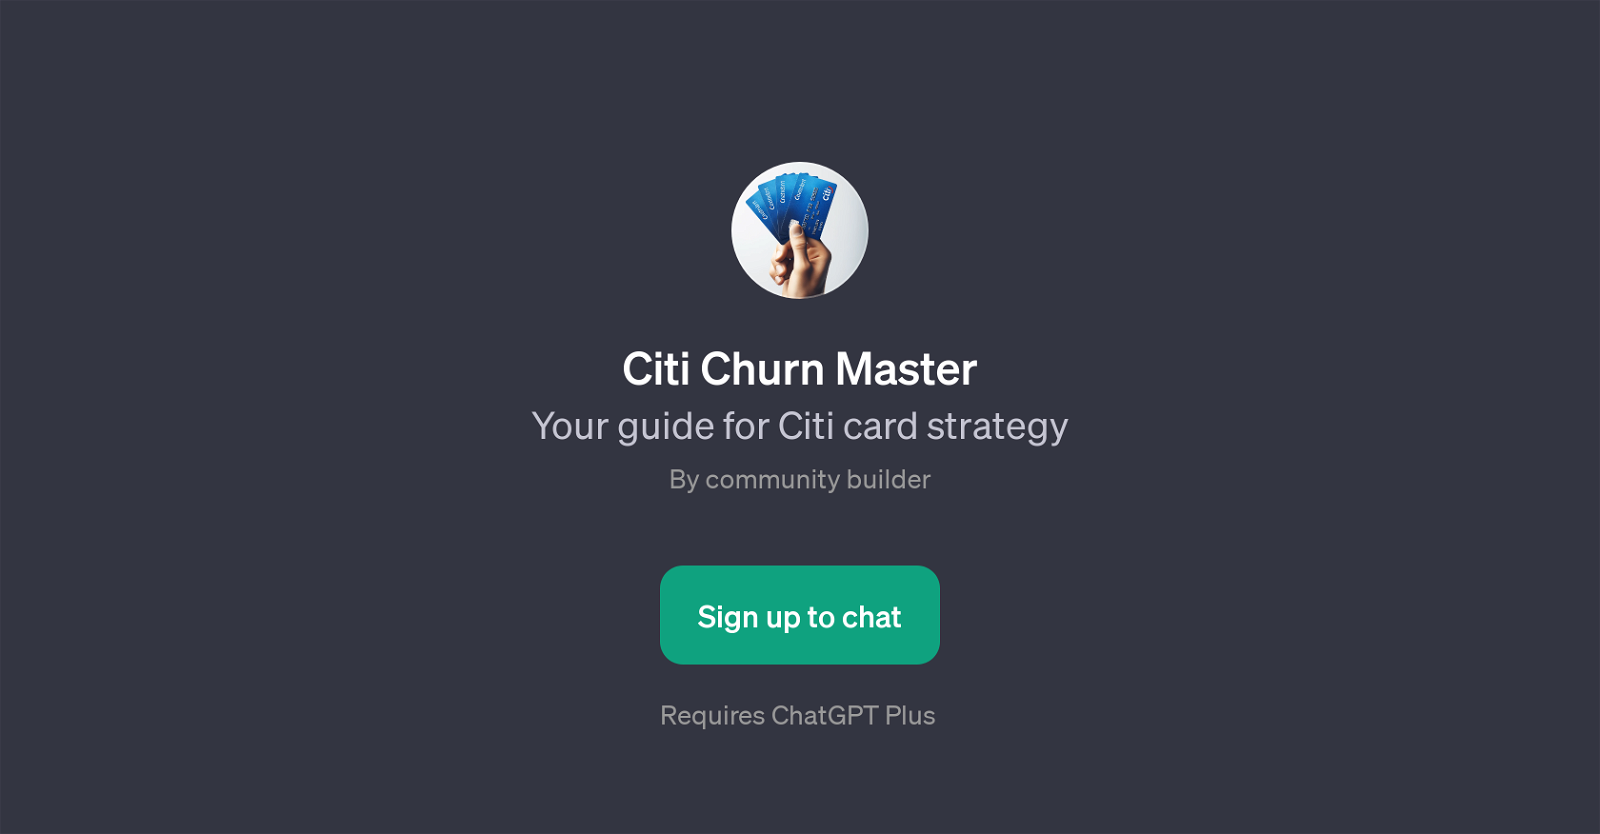 Citi Churn Master website